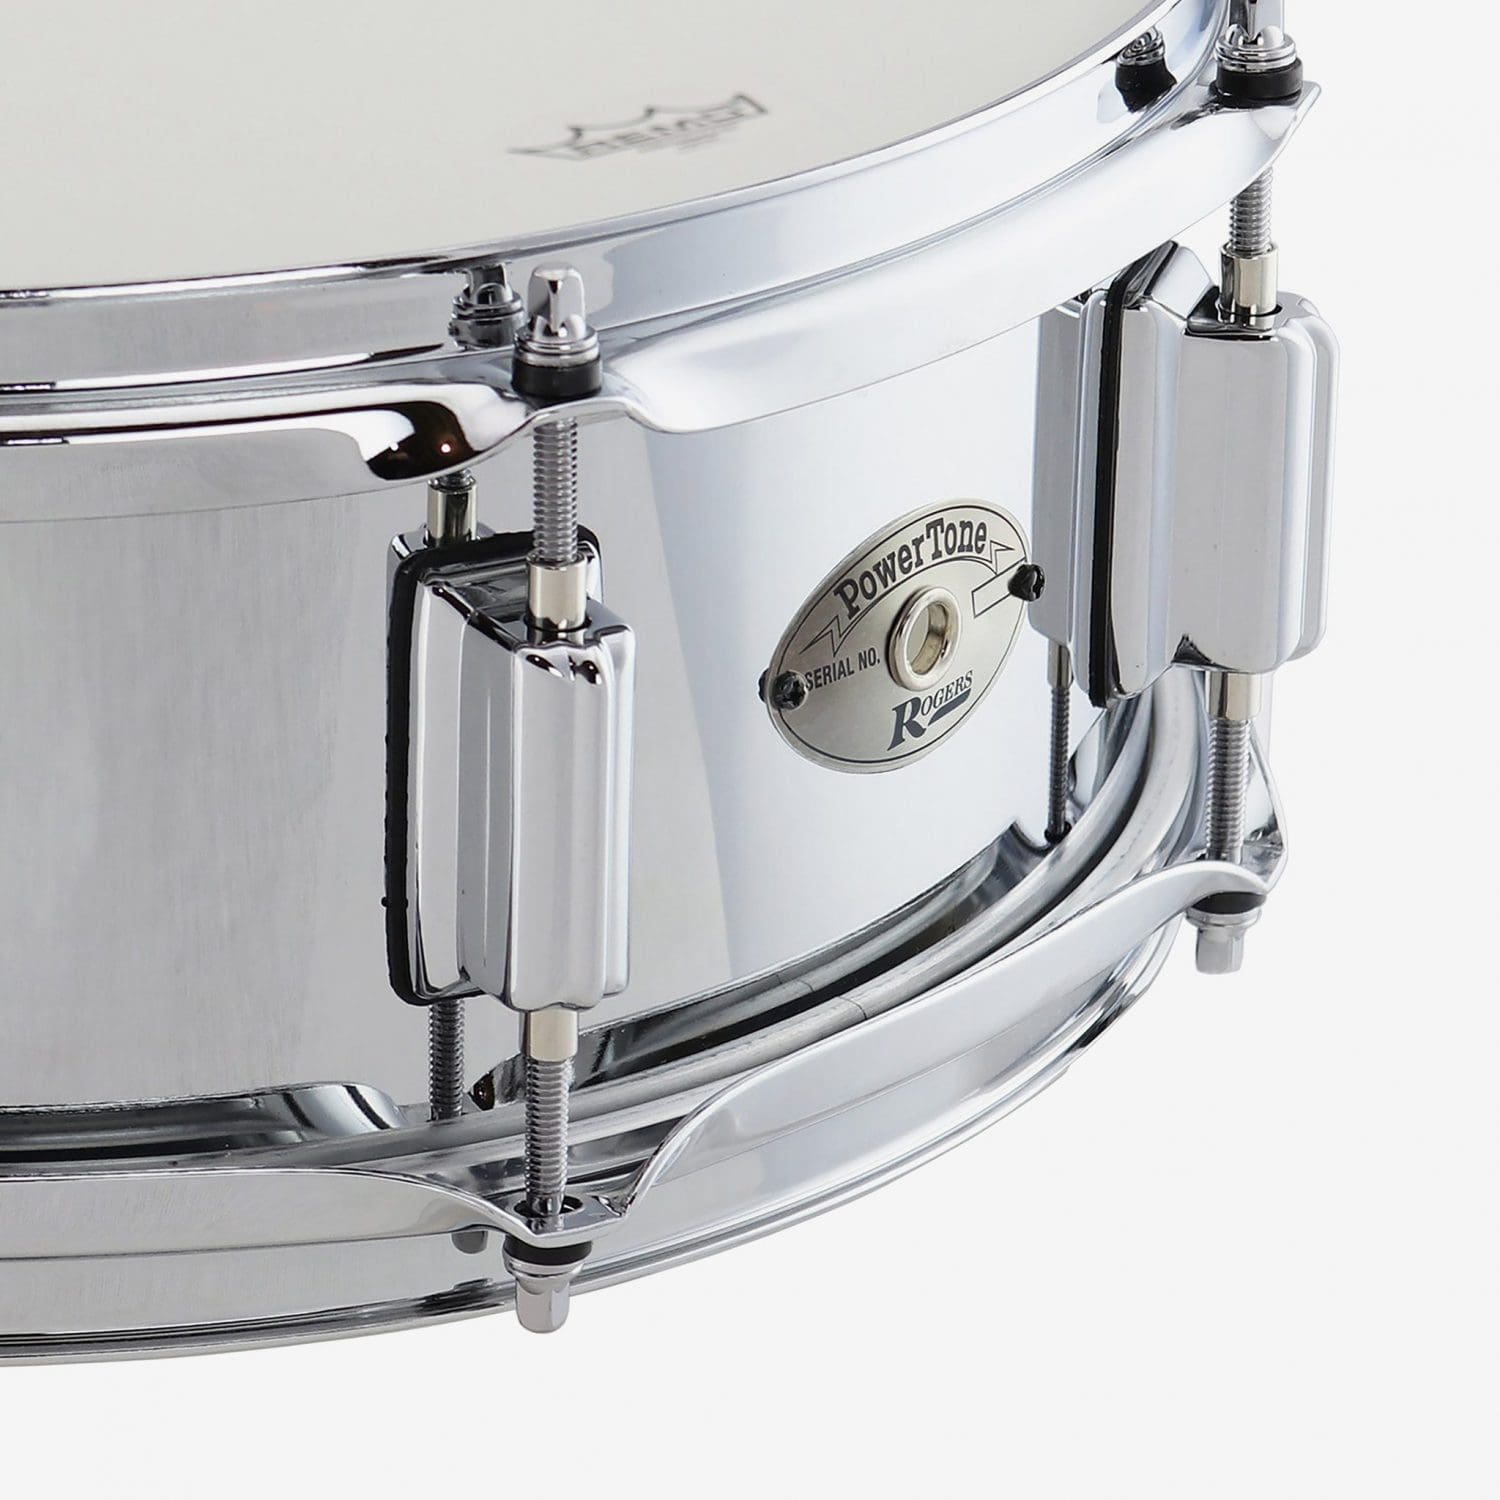 Powertone Steel Snare Drum